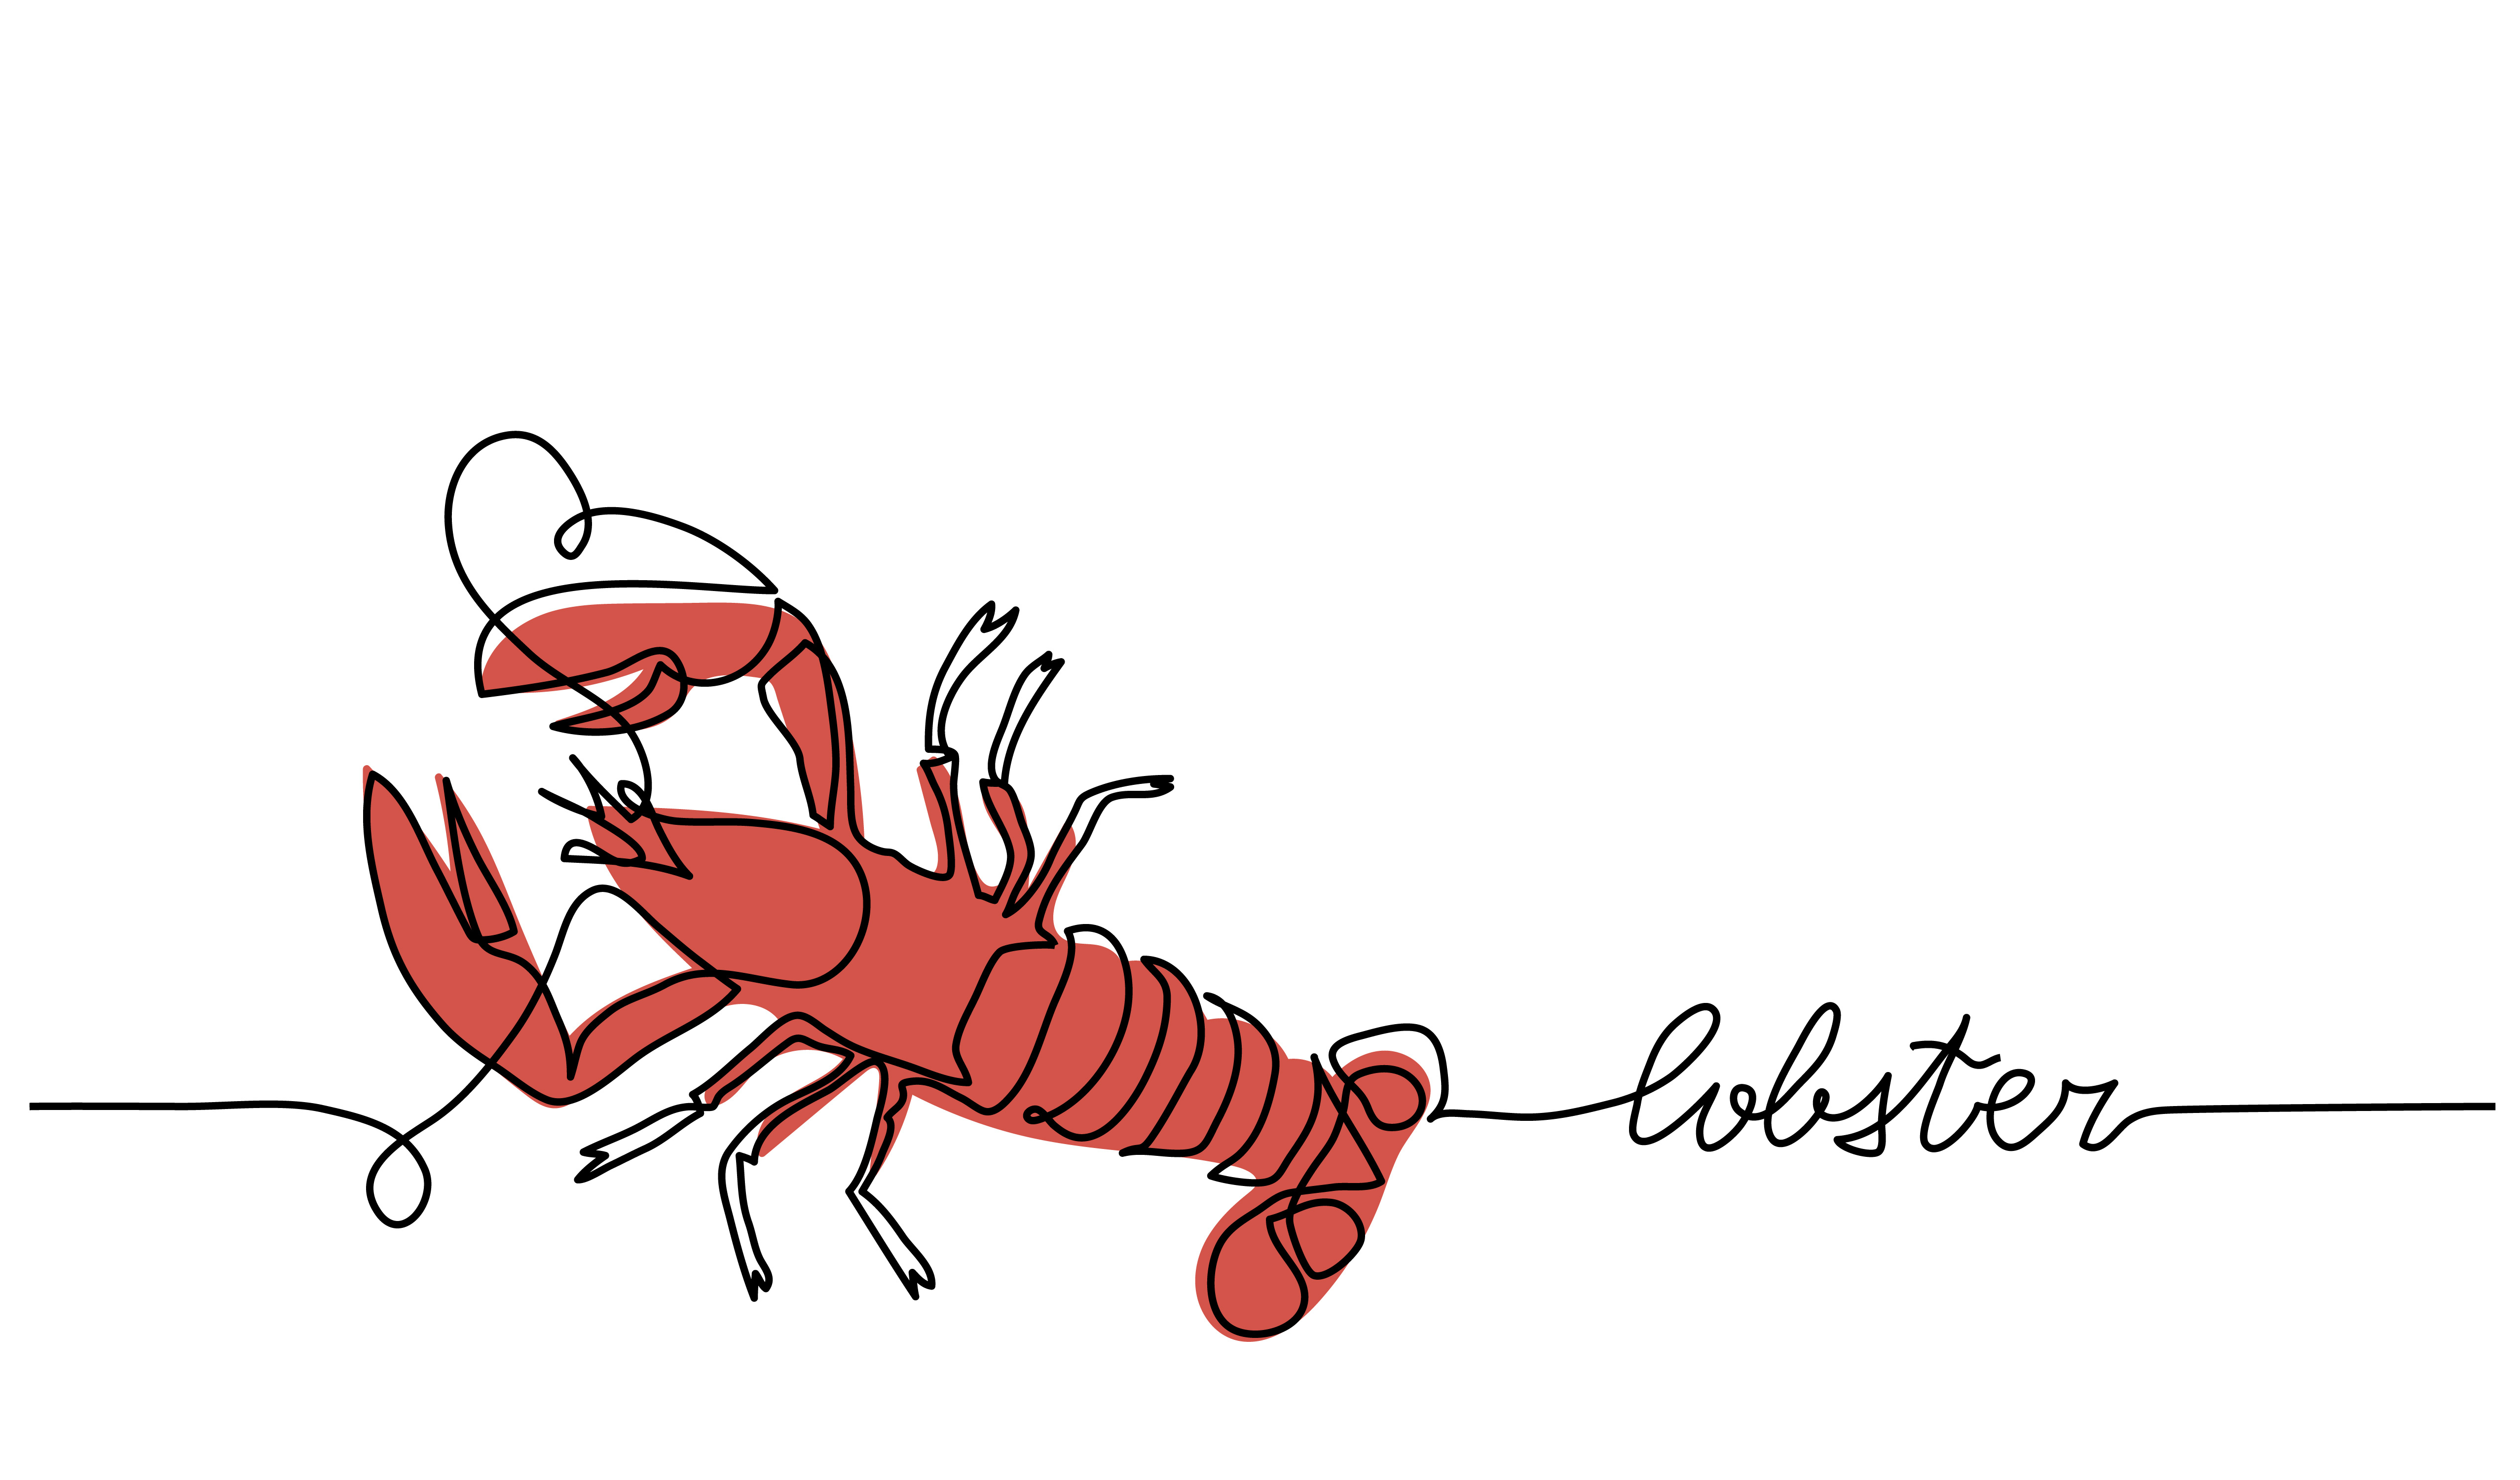 Lobster & More